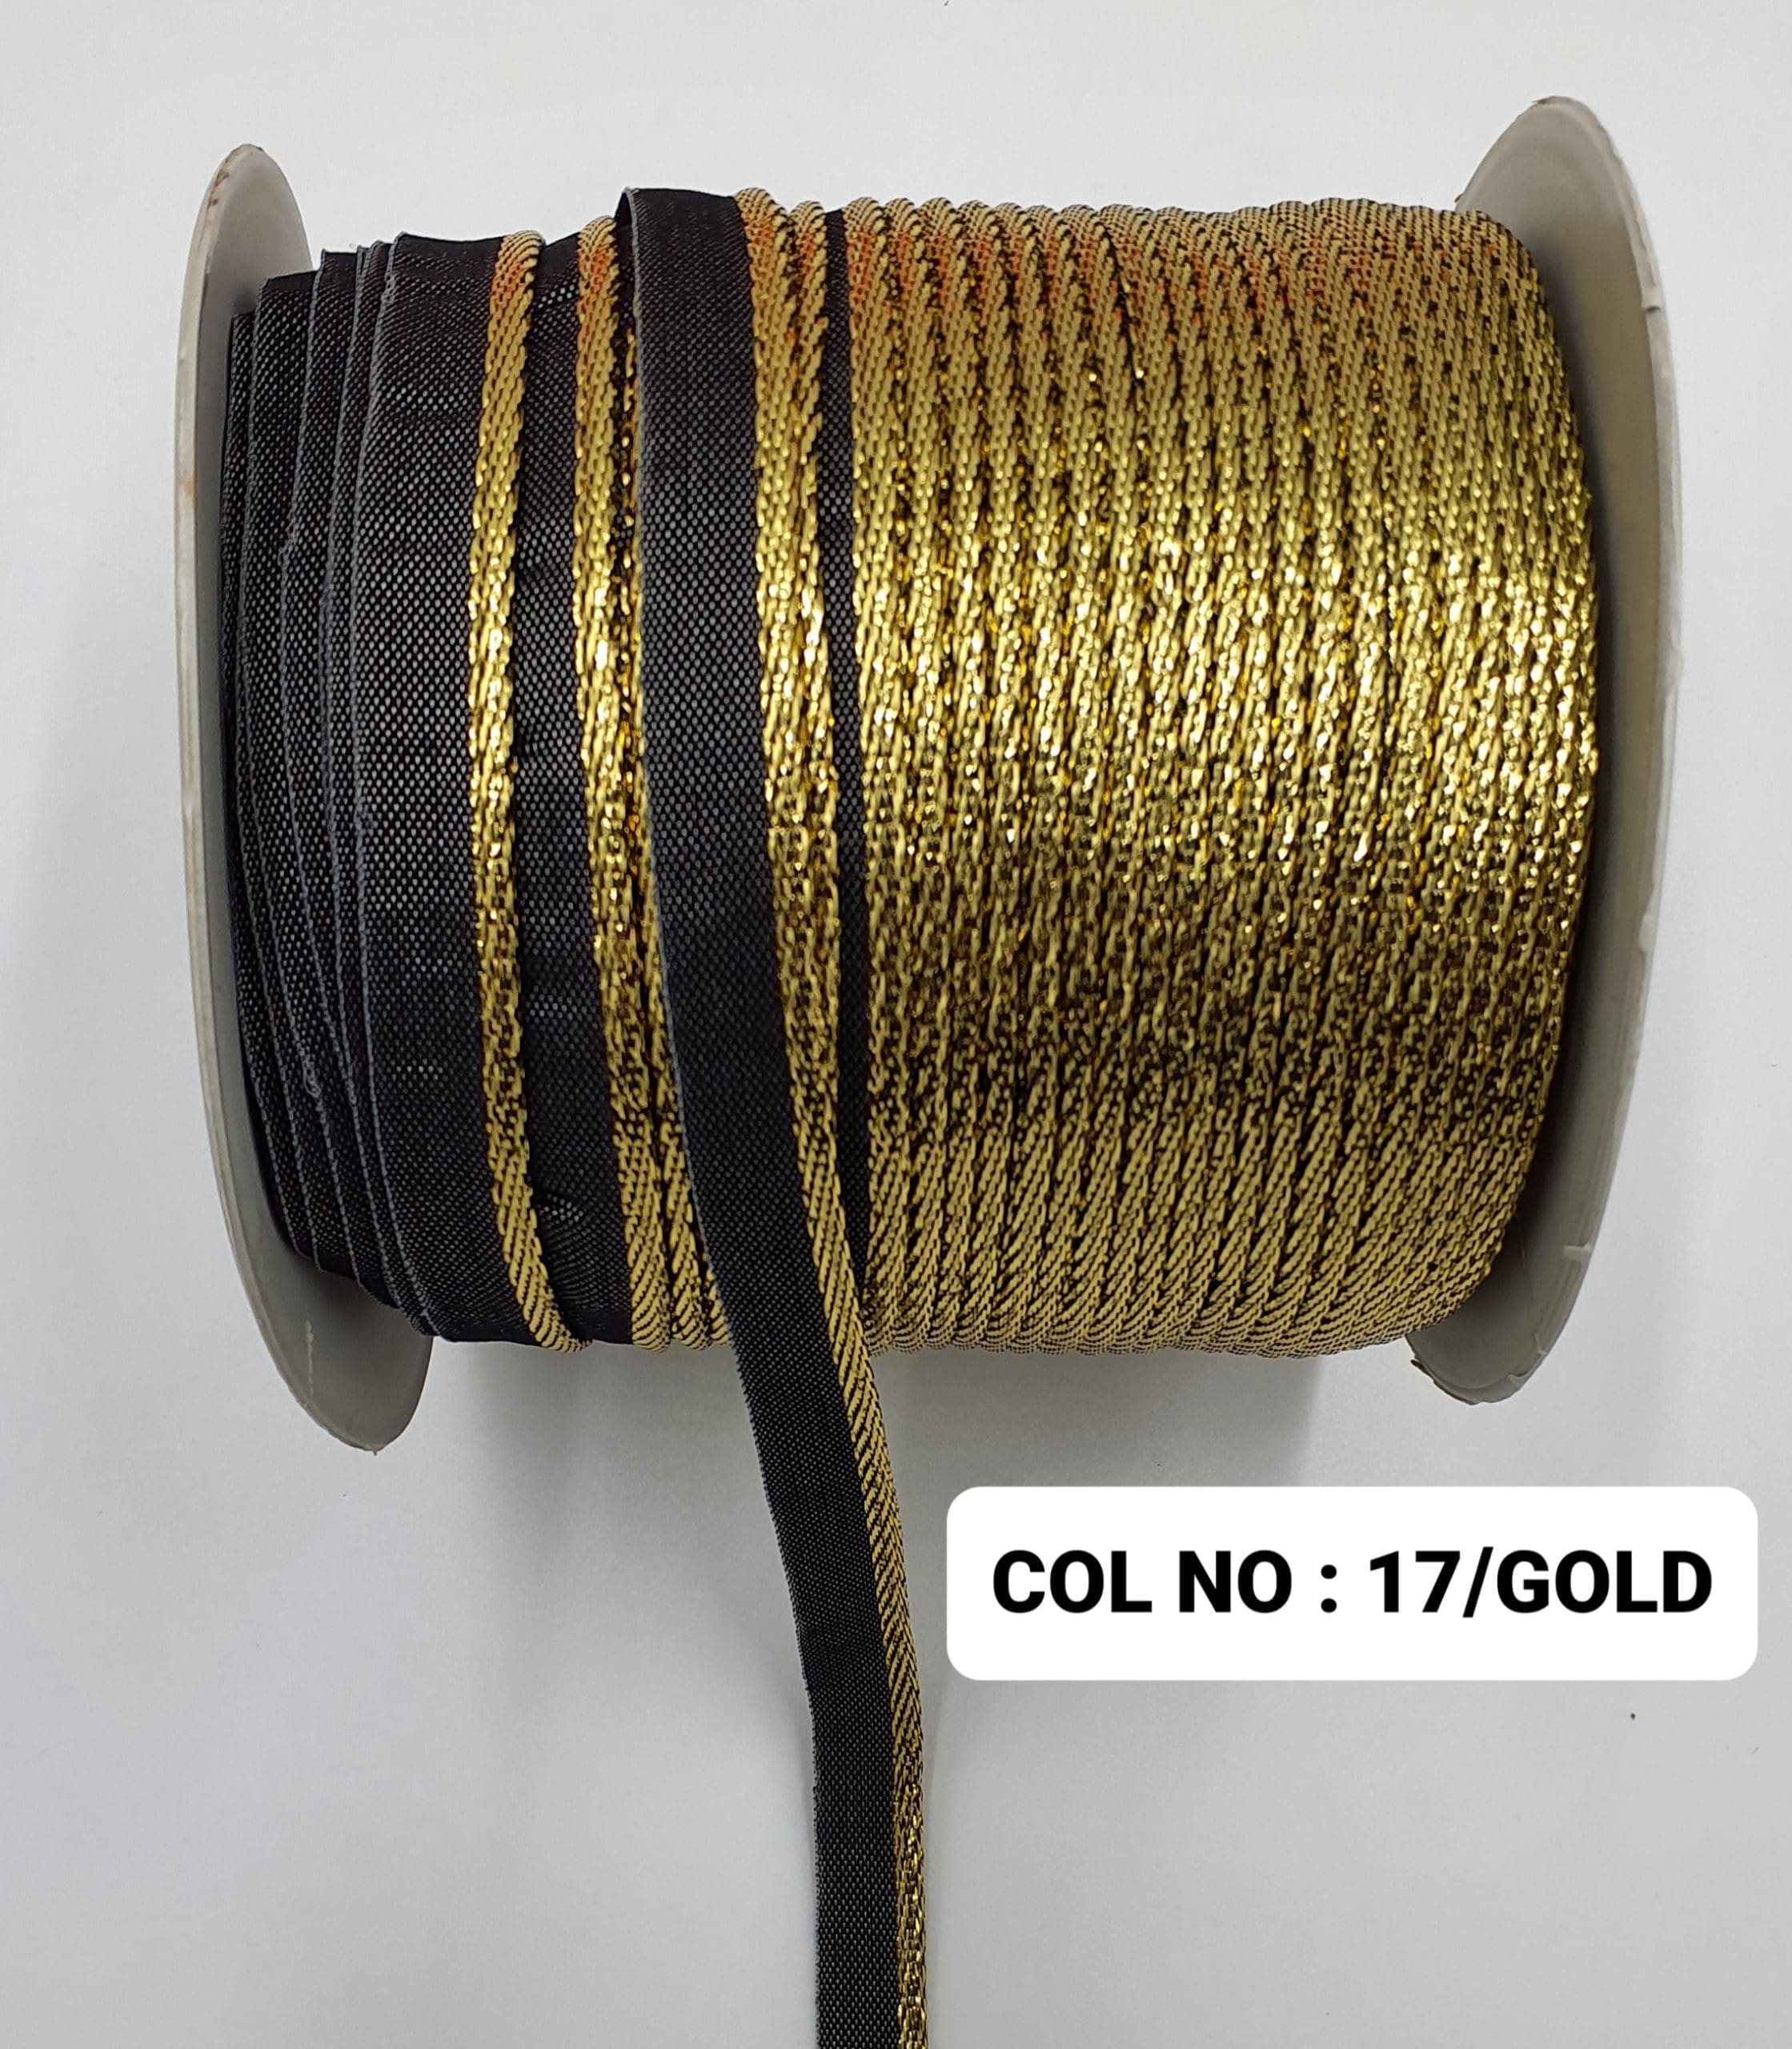 METALIC RIBBON:90MTR (5108/B) - 17/GOLD